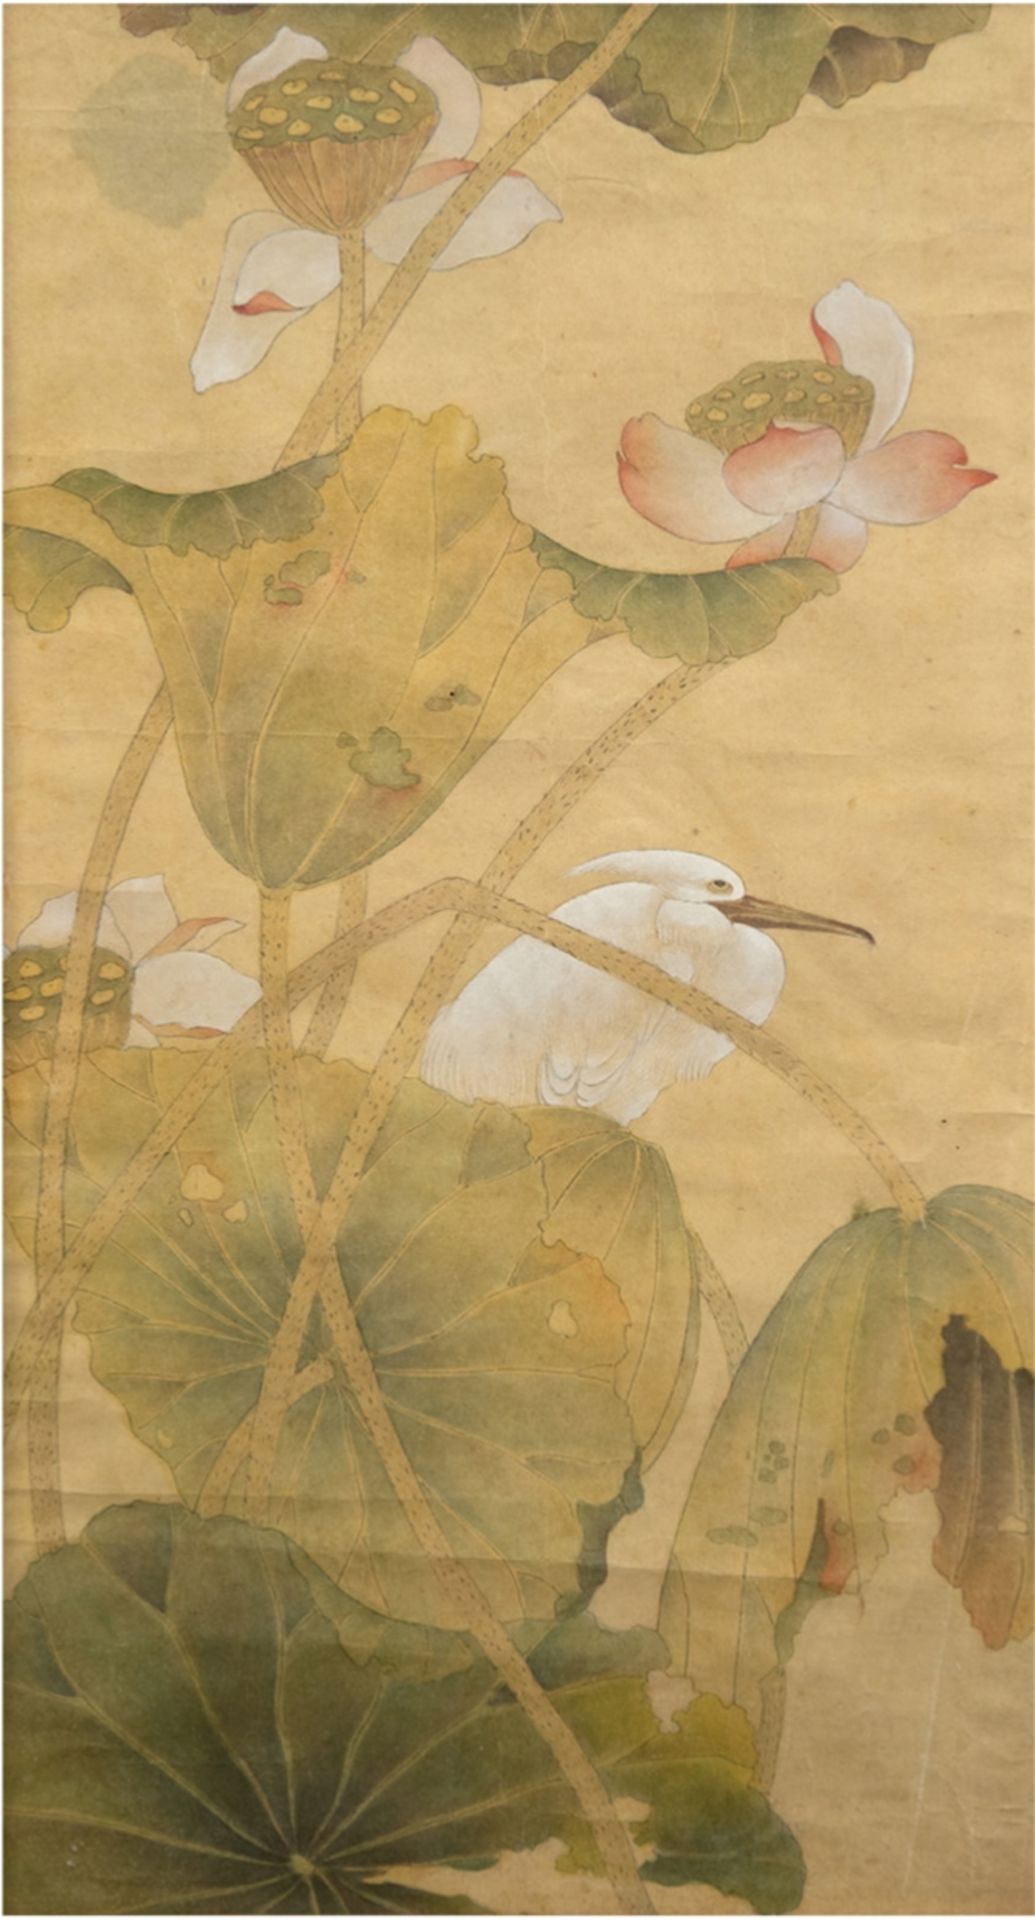 Yang, He "Vogel auf Blütenzweig", China, Aquarell, rücks. betitelt, 49,5x26,5 cm, hinter Glas und R